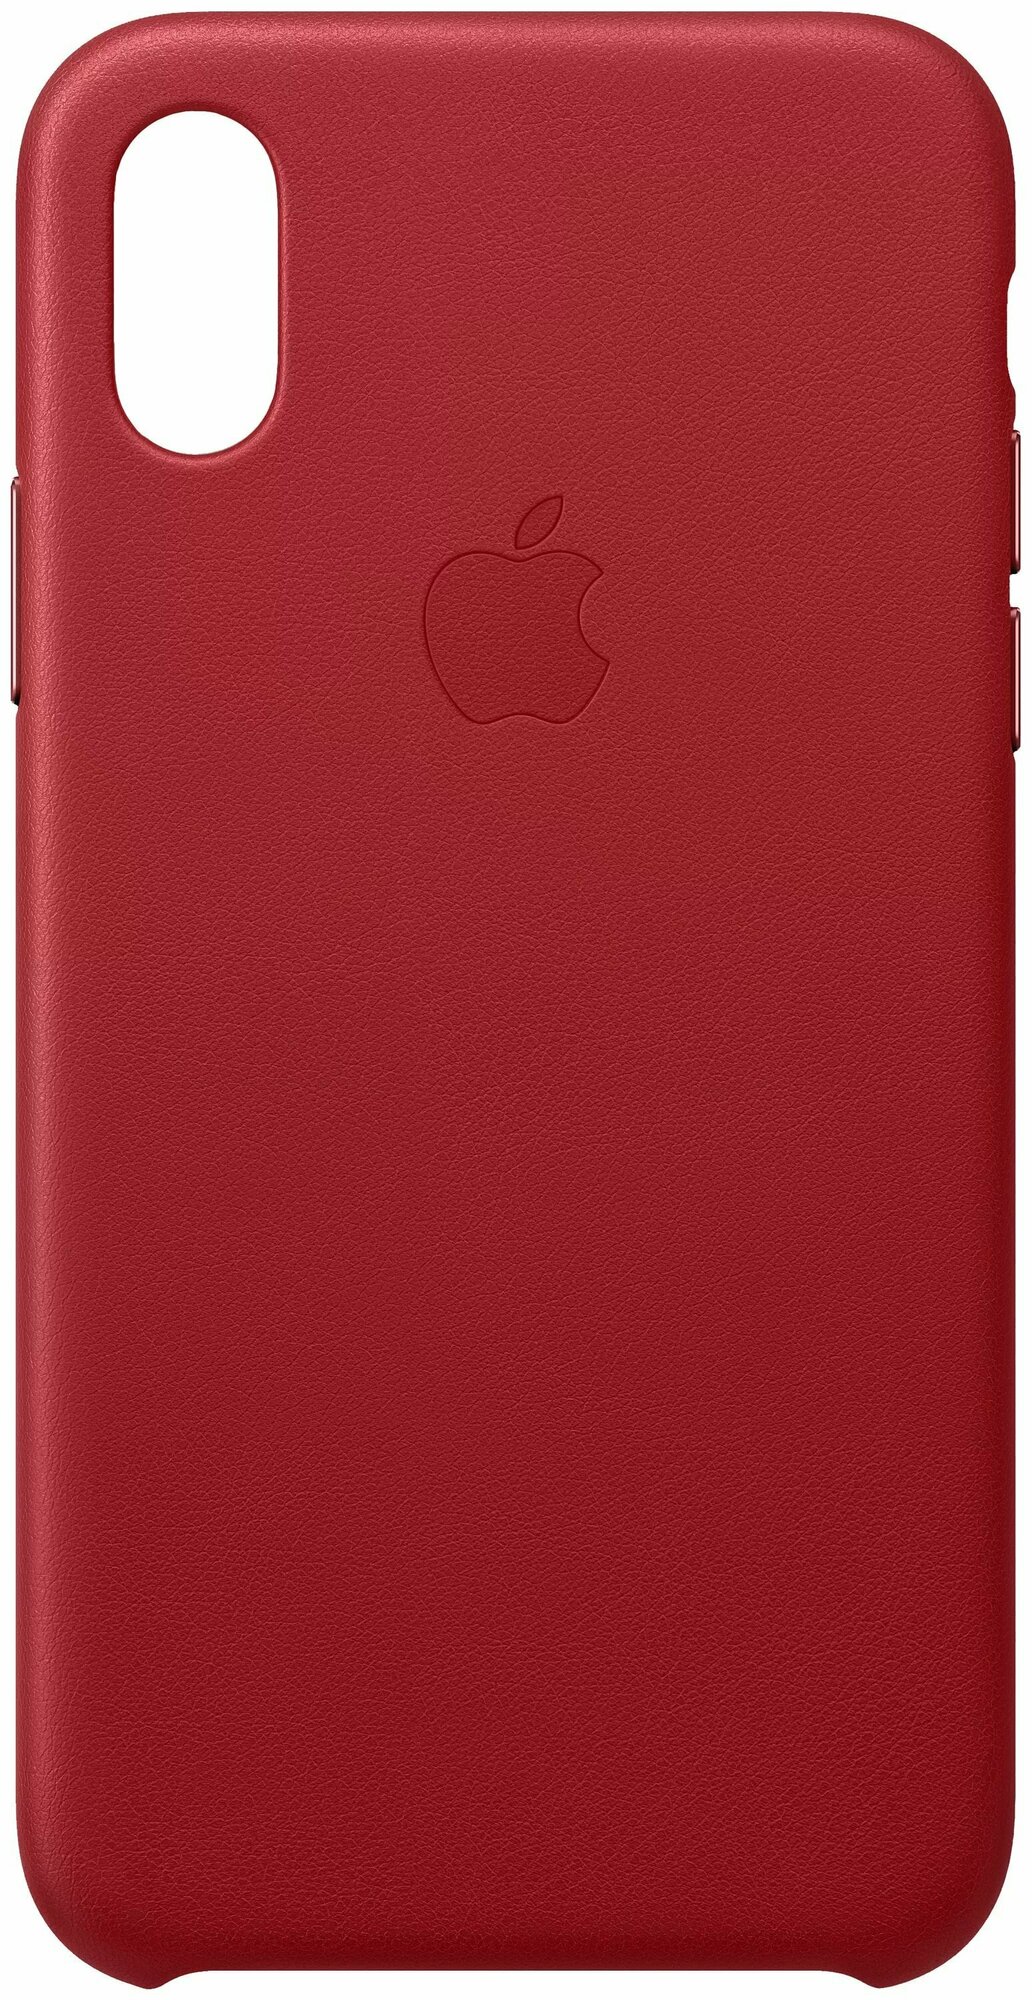 ClipCase Aksberry Leather для Apple iPhone XS Max красный